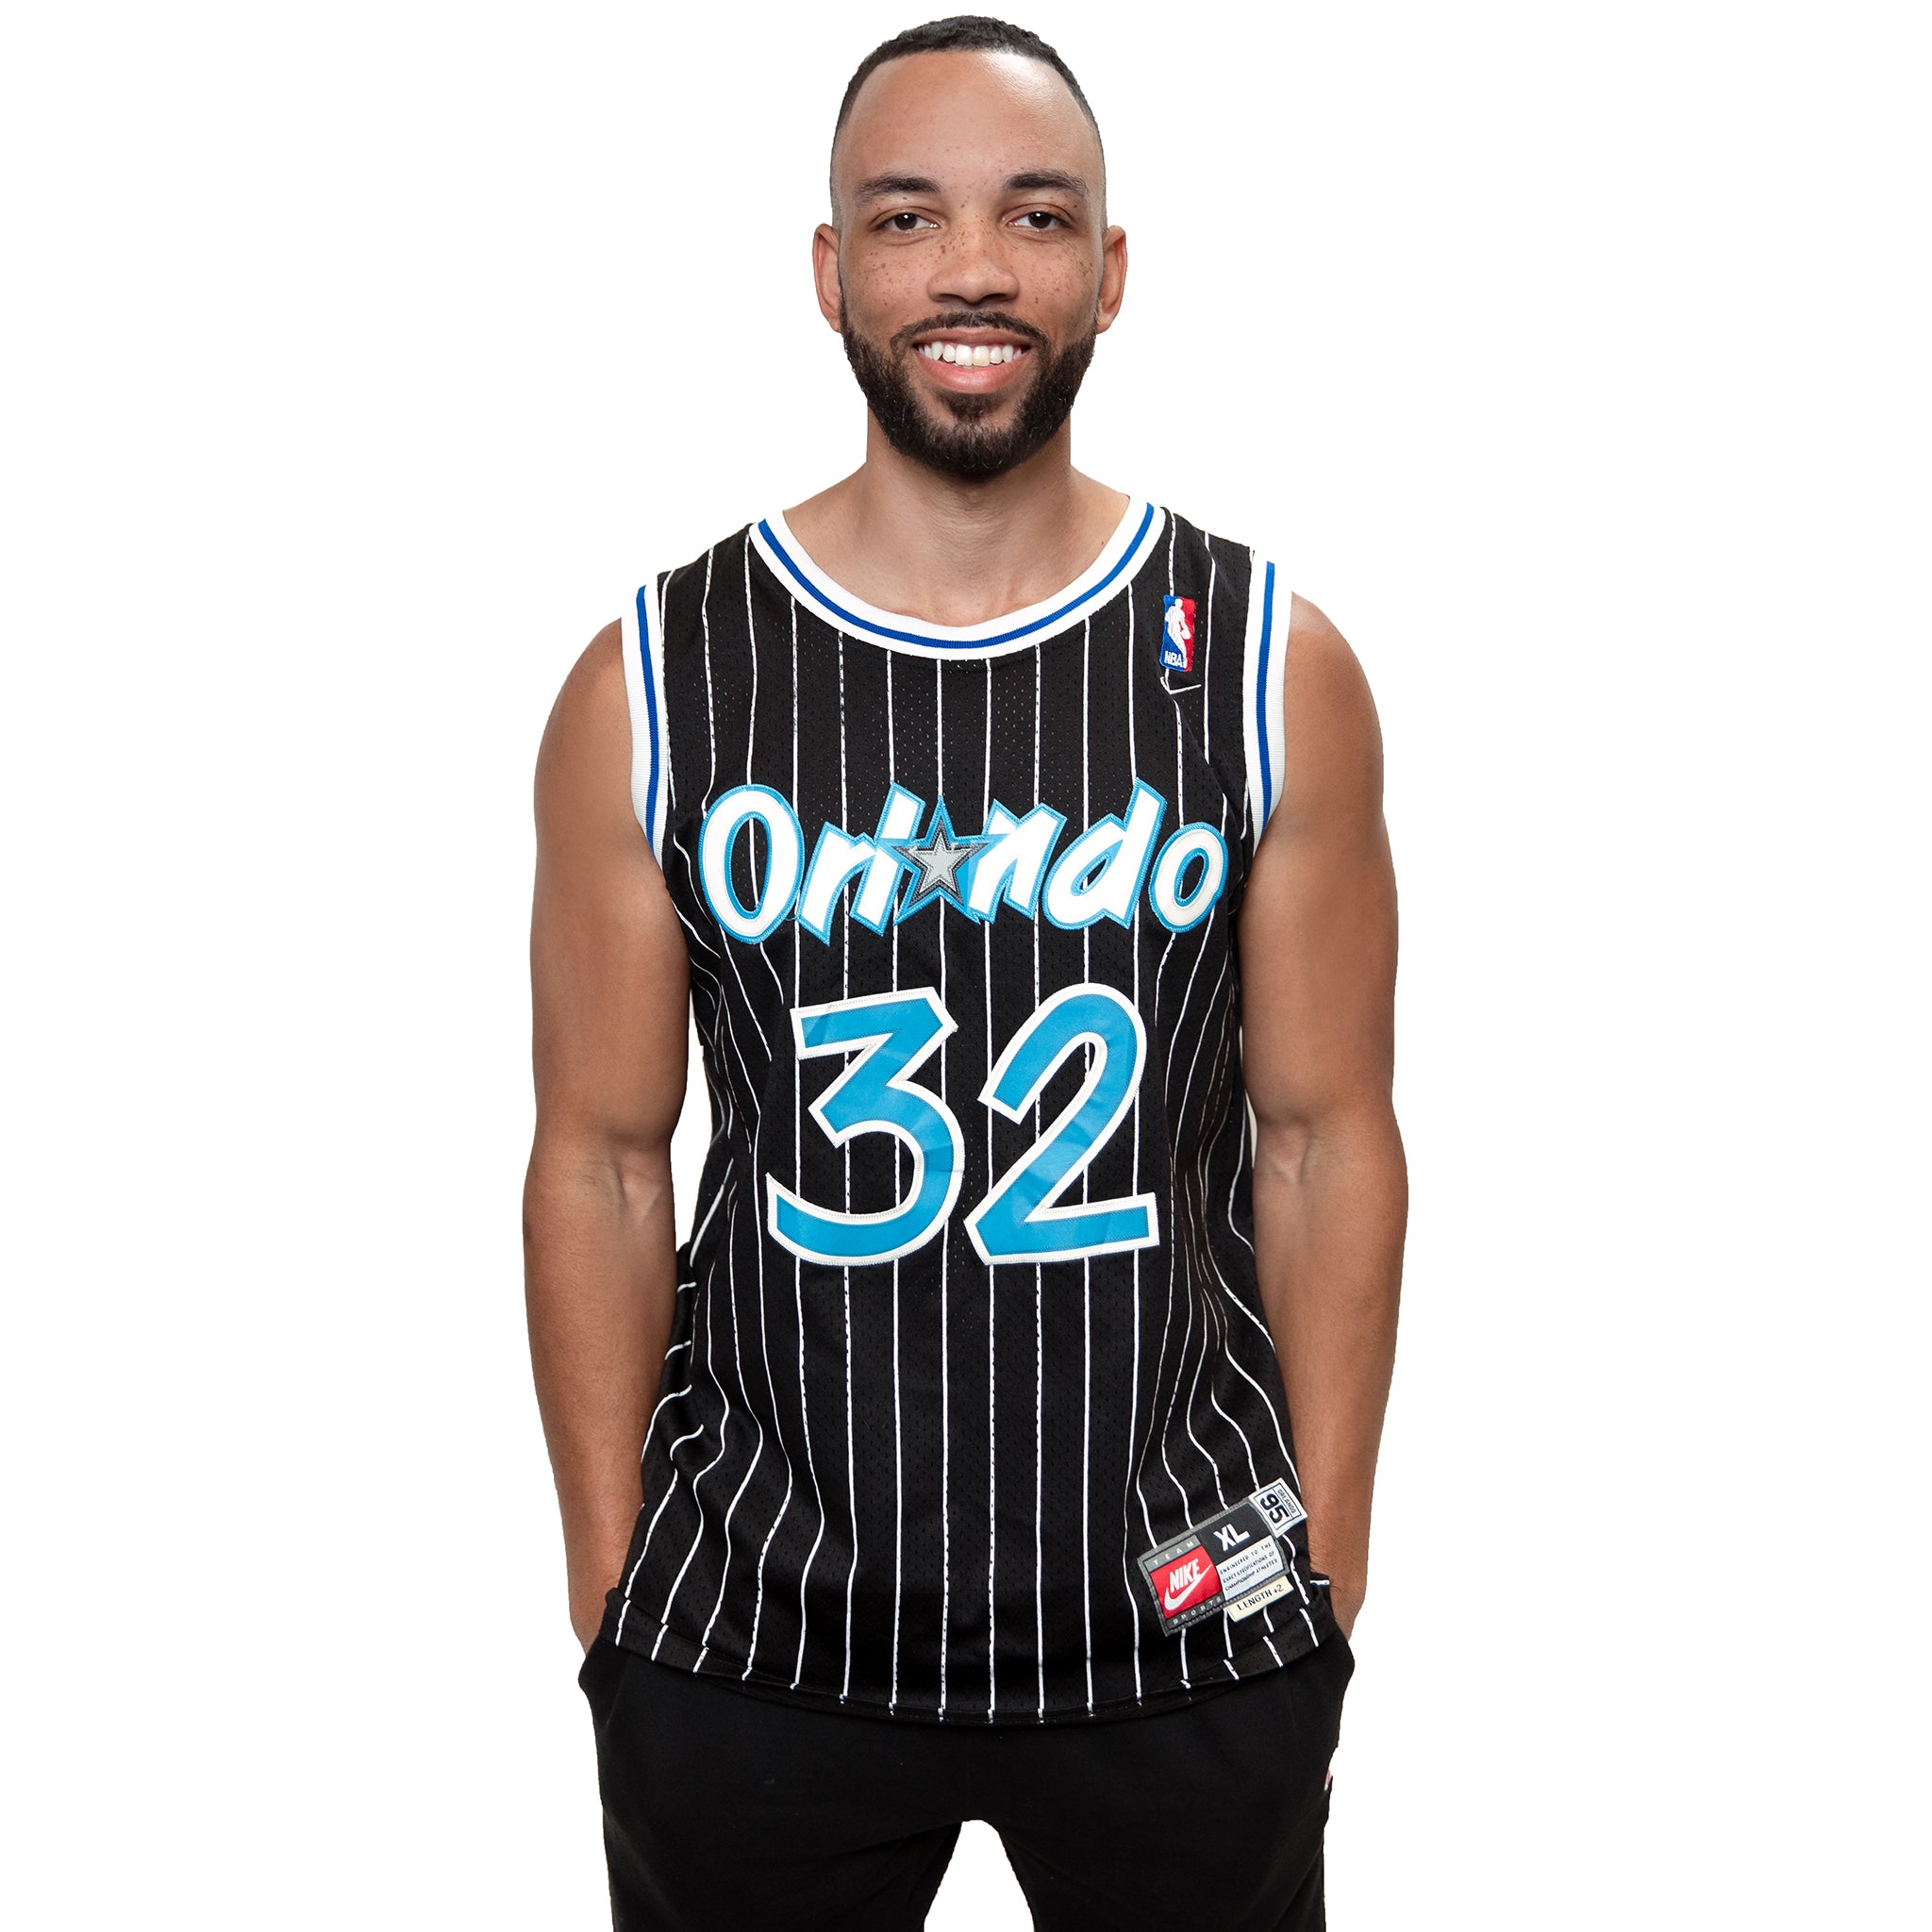 Shaquille O'Neal 32 Orlando Magic Jersey : r/luckjerseys